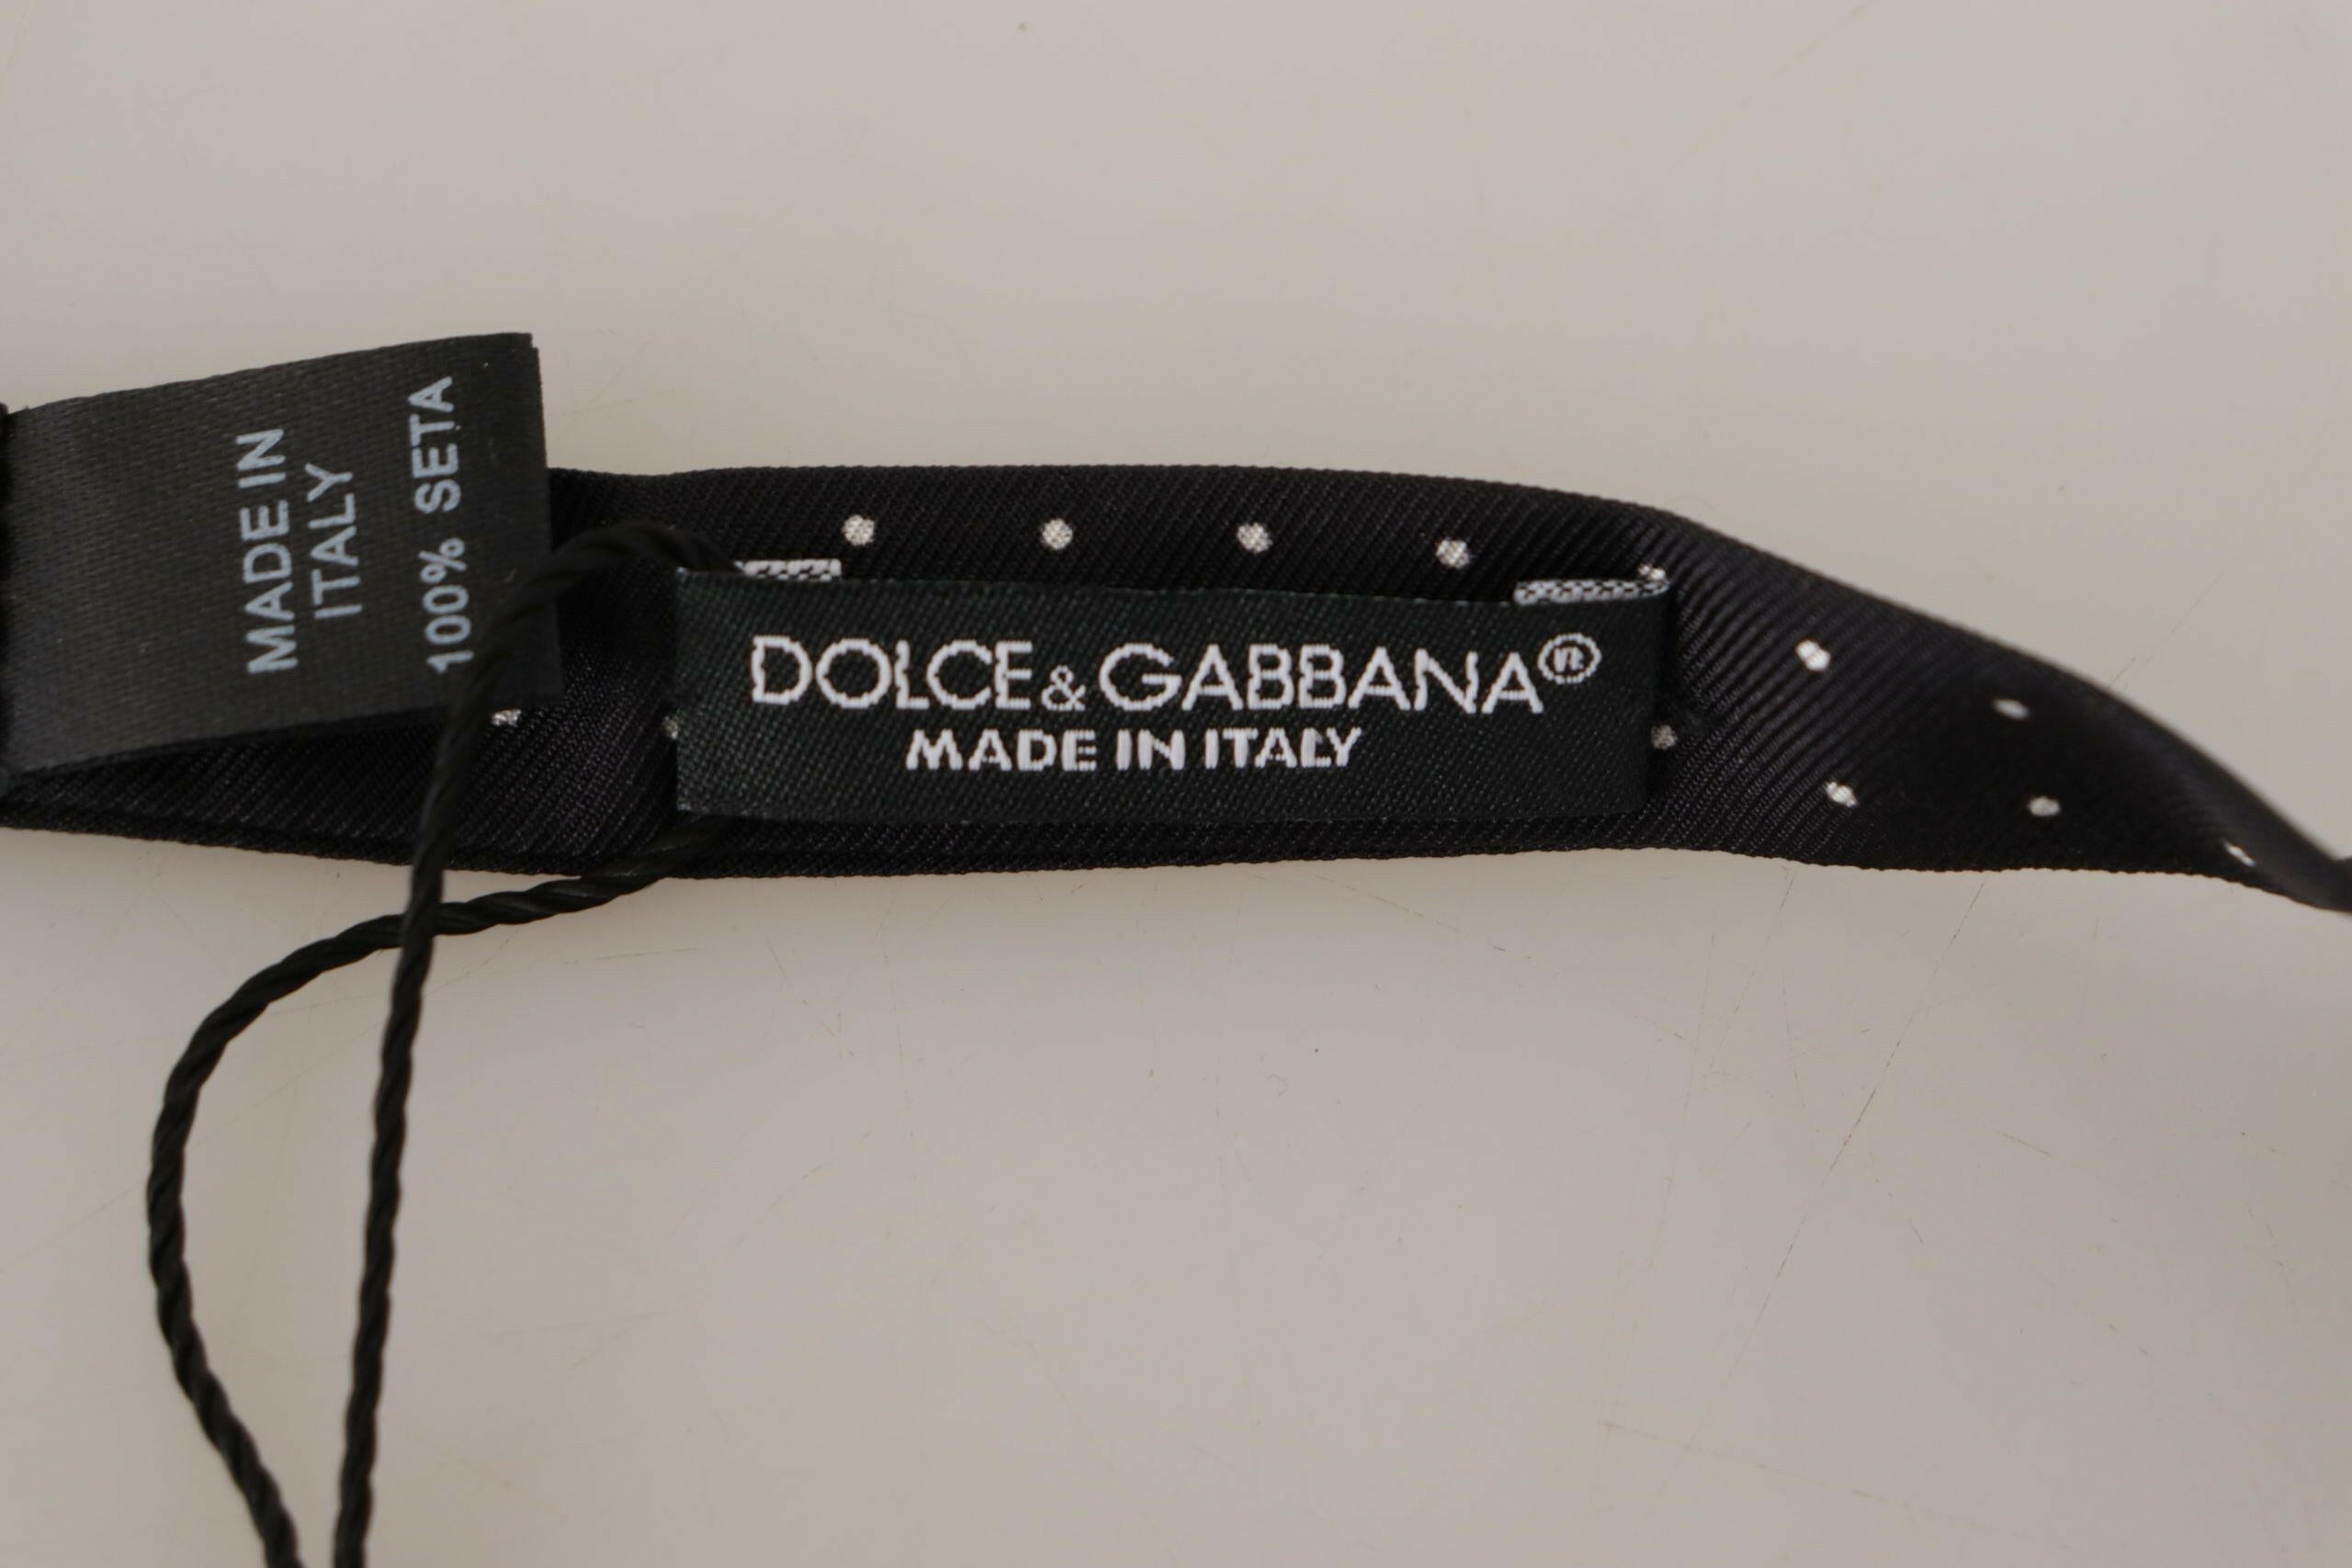 Dolce & Gabbana Black White Polka Dot 100% Silk Neck Papillon Tie - GENUINE AUTHENTIC BRAND LLC  